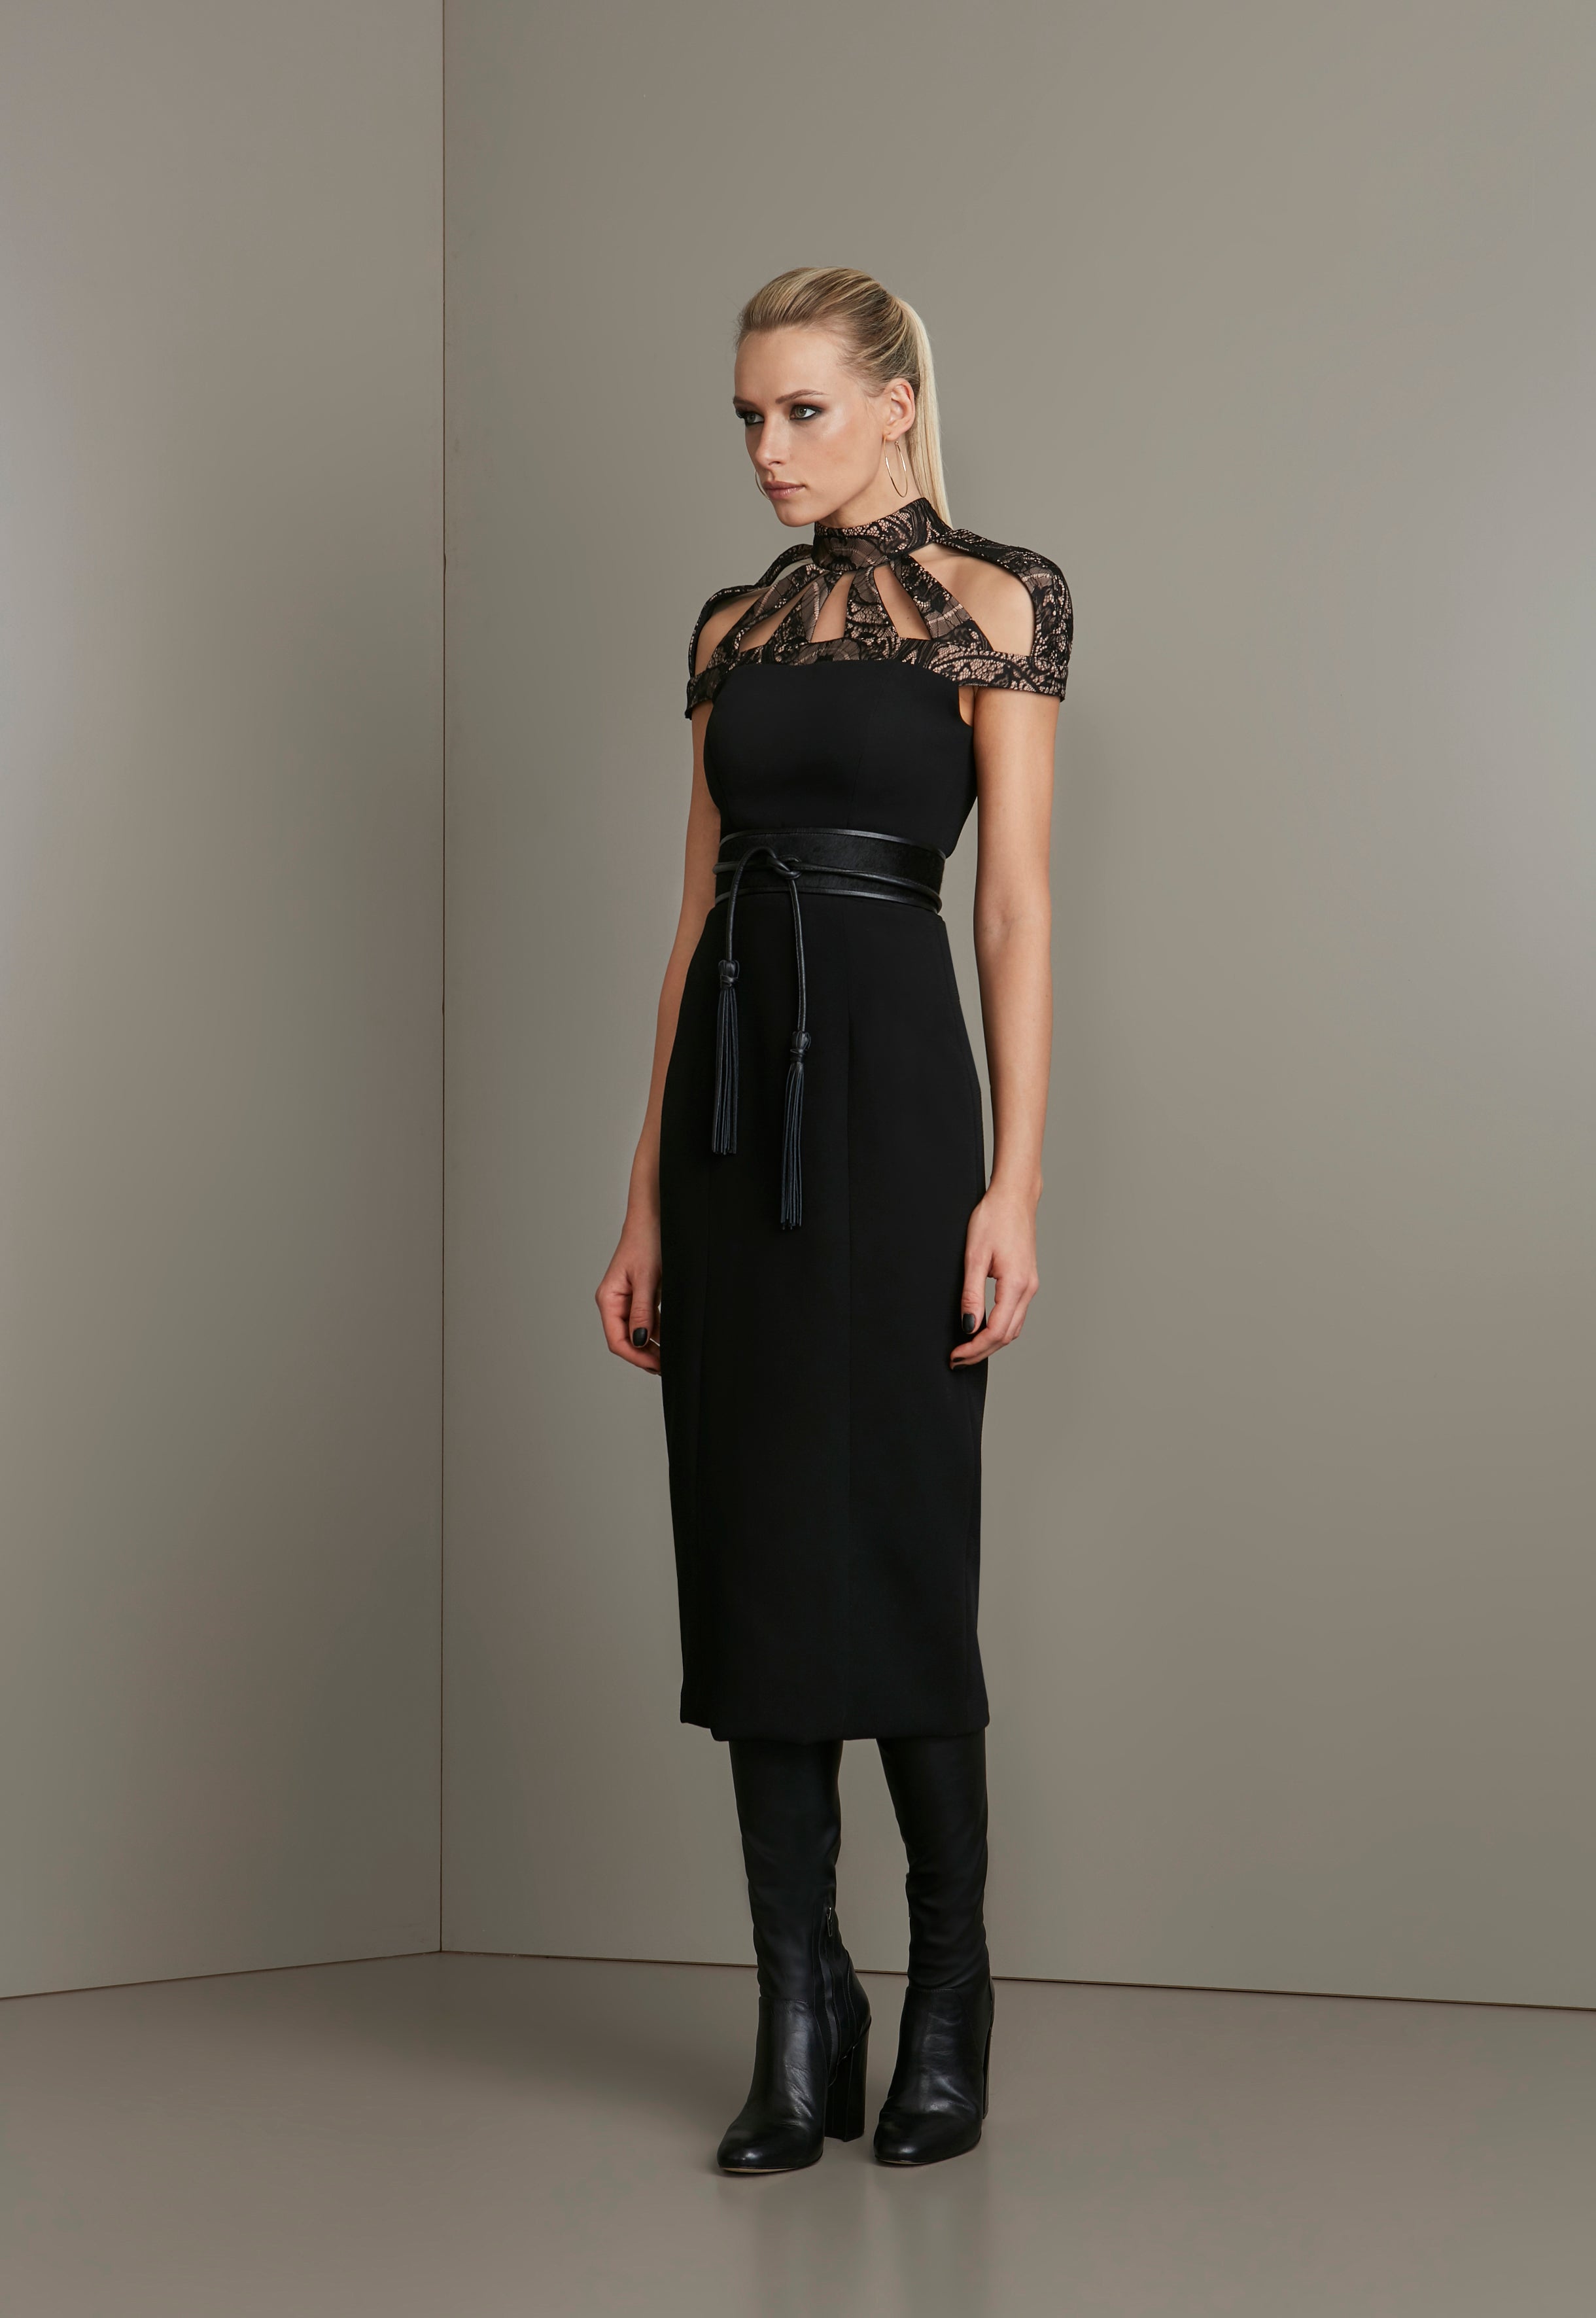 Black & nude mesh dress